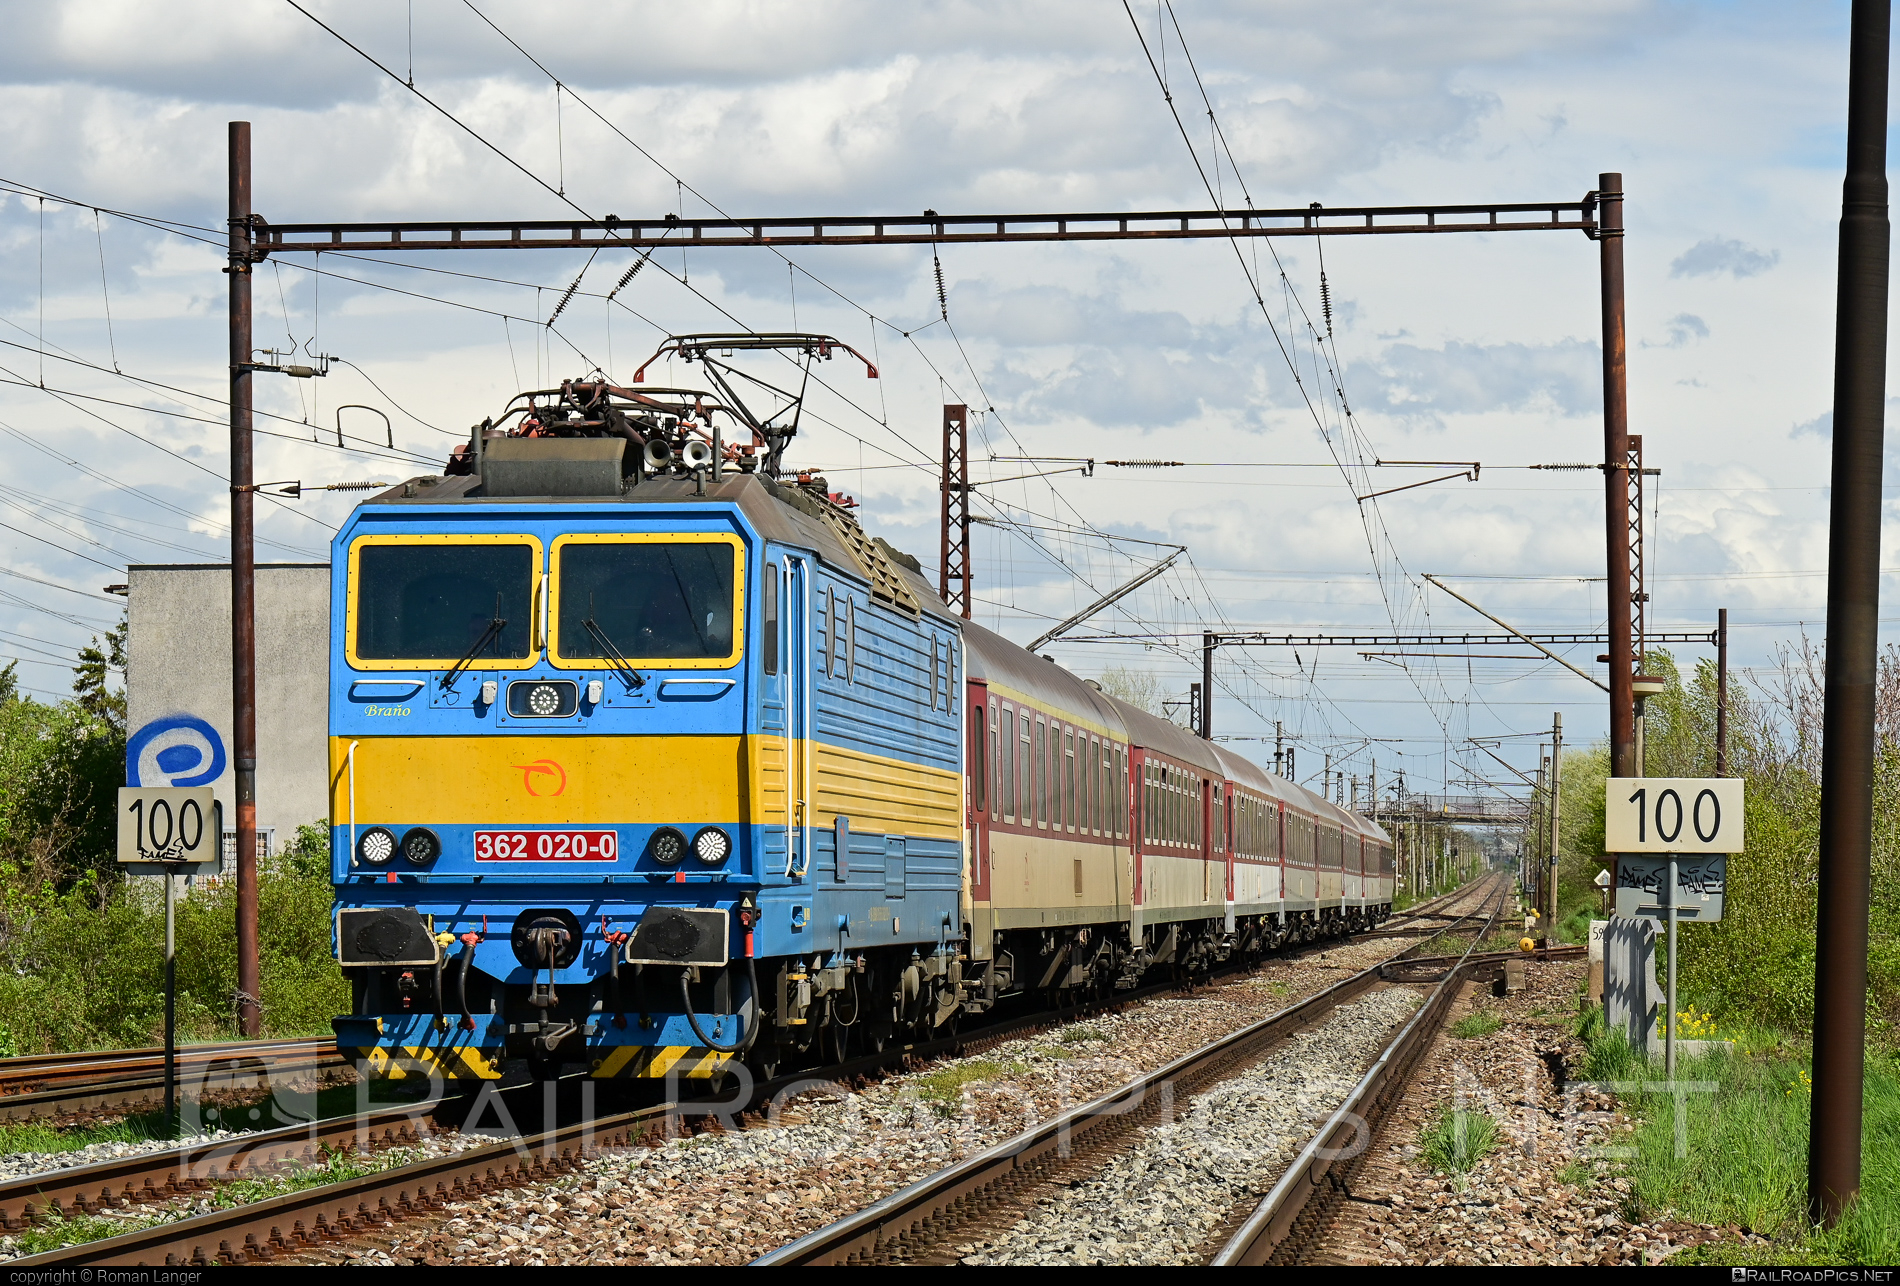 Škoda 69Er - 362 020-0 operated by Železničná Spoločnost' Slovensko, a.s. #ZeleznicnaSpolocnostSlovensko #eso #locomotive362 #rychleeso #skoda #skoda69er #zssk